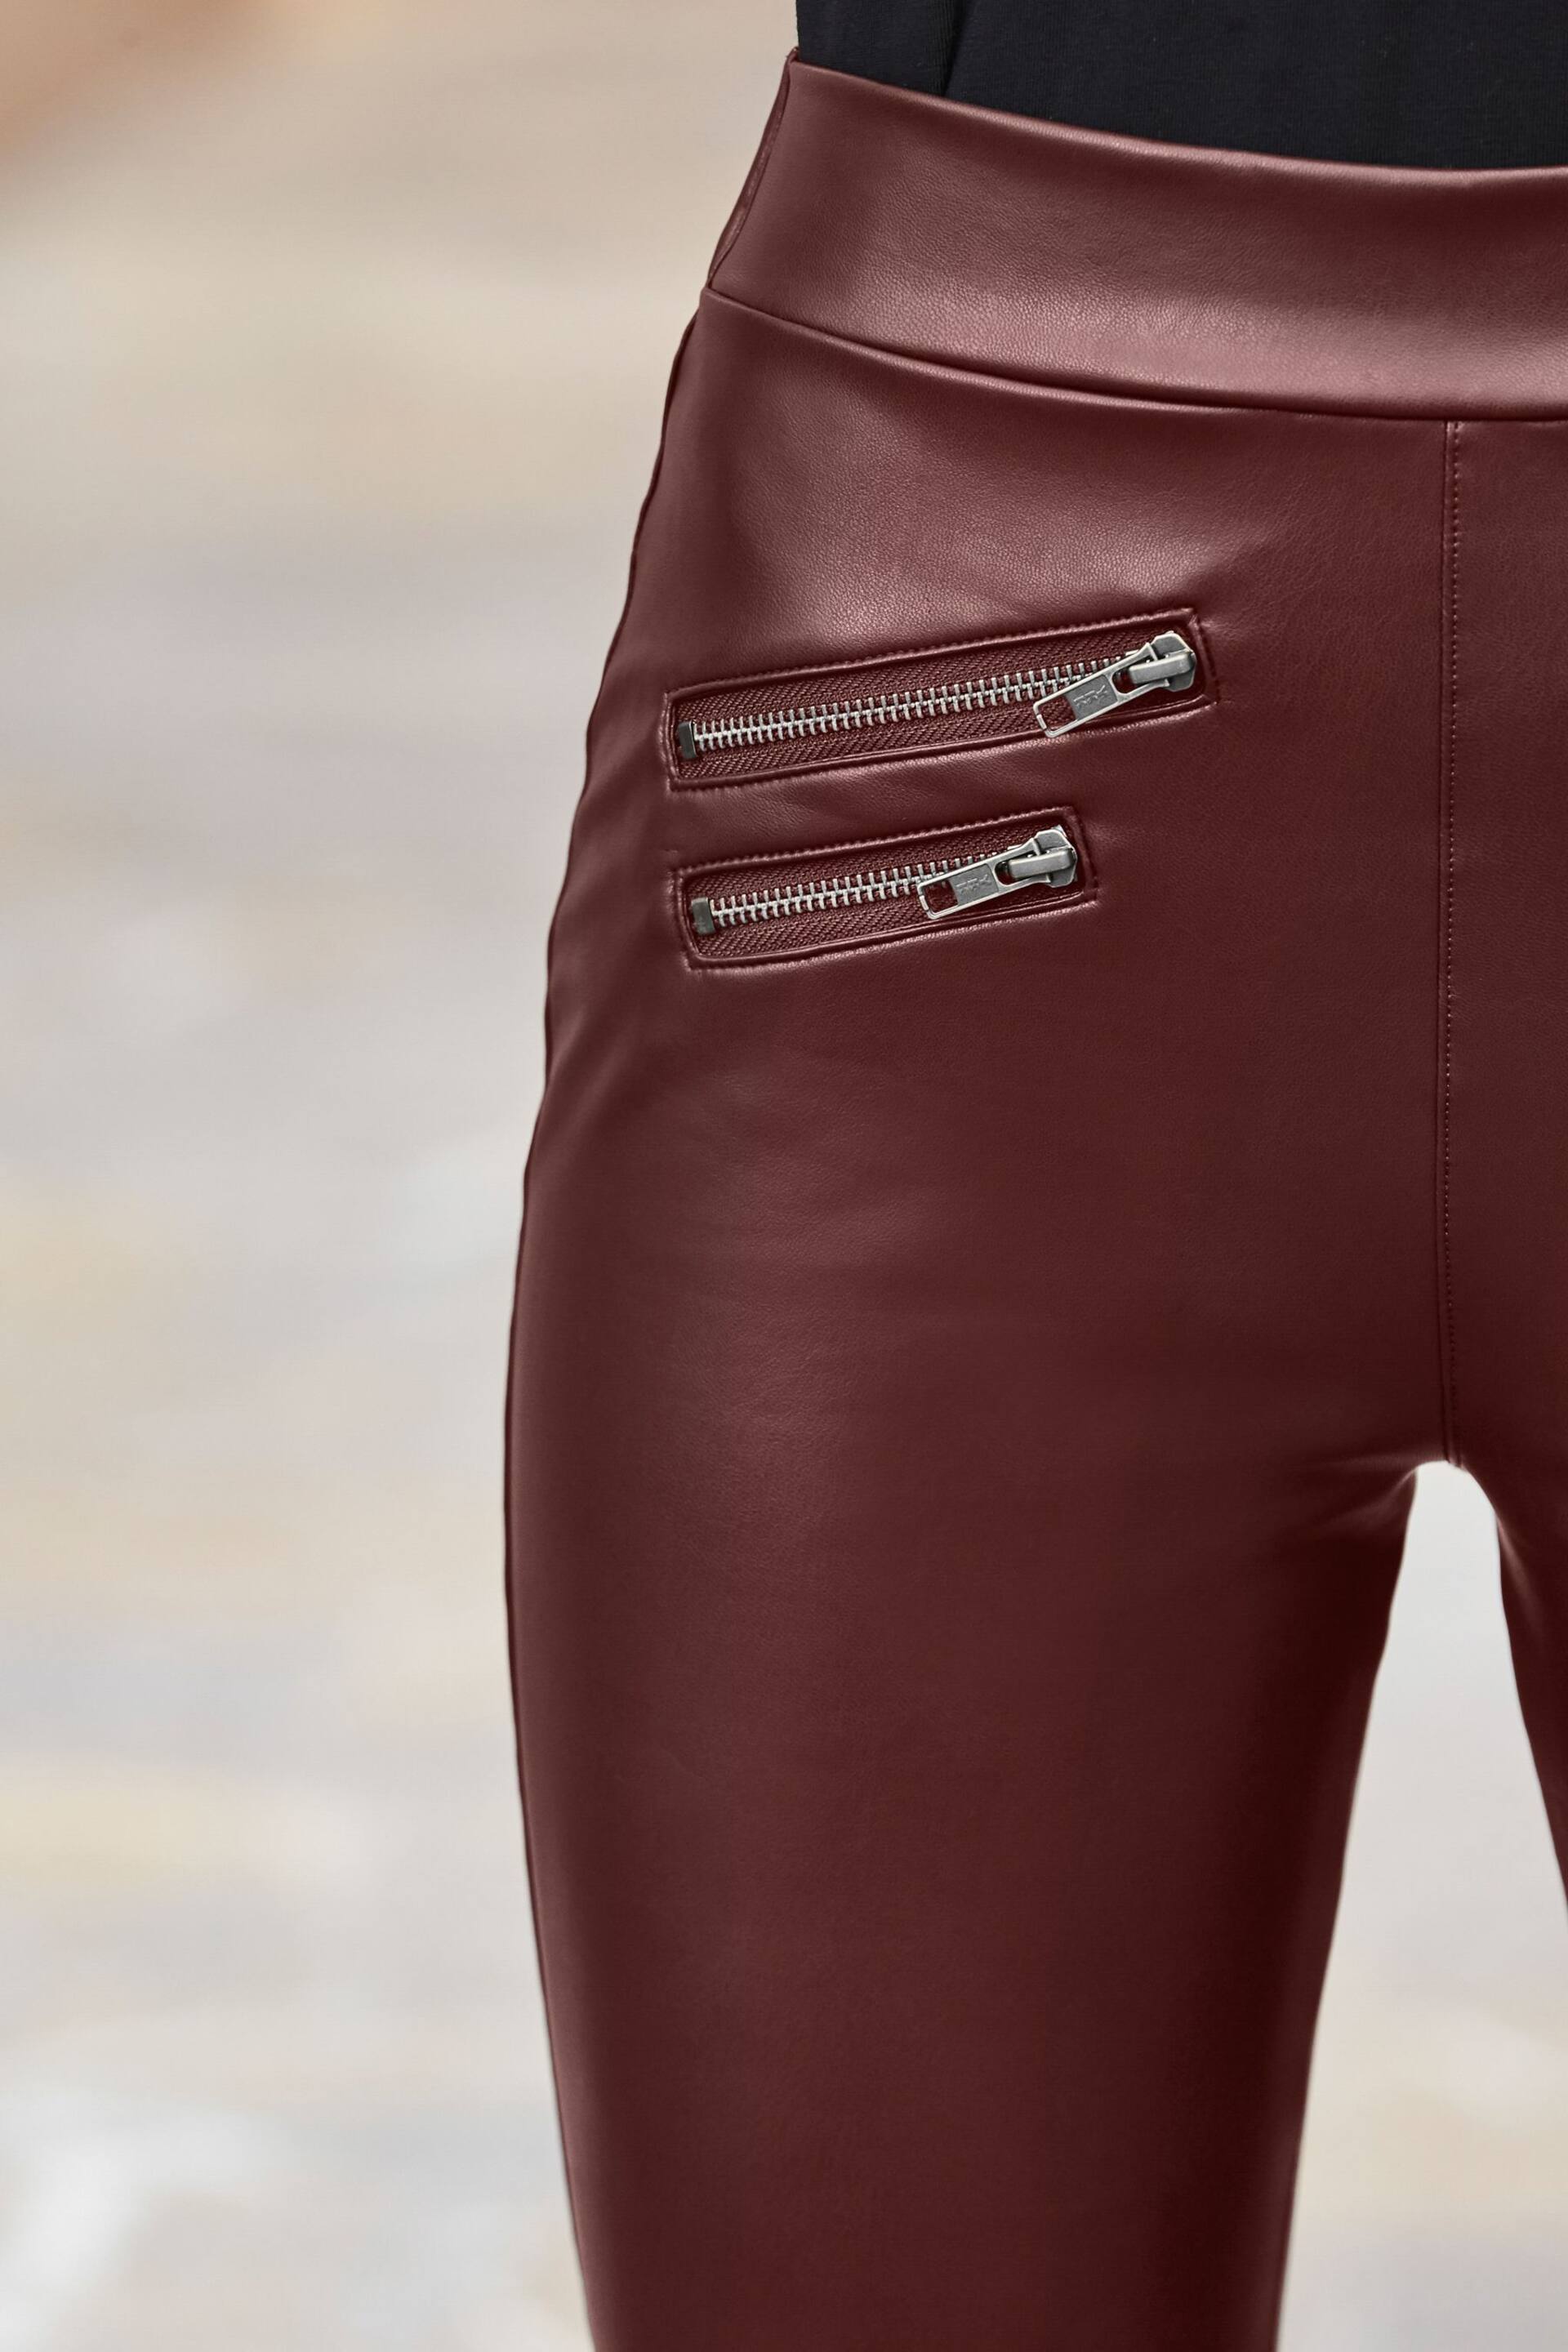 Sosandar Red/Cream Tall Leather Look Premium Leggings - Image 4 of 4